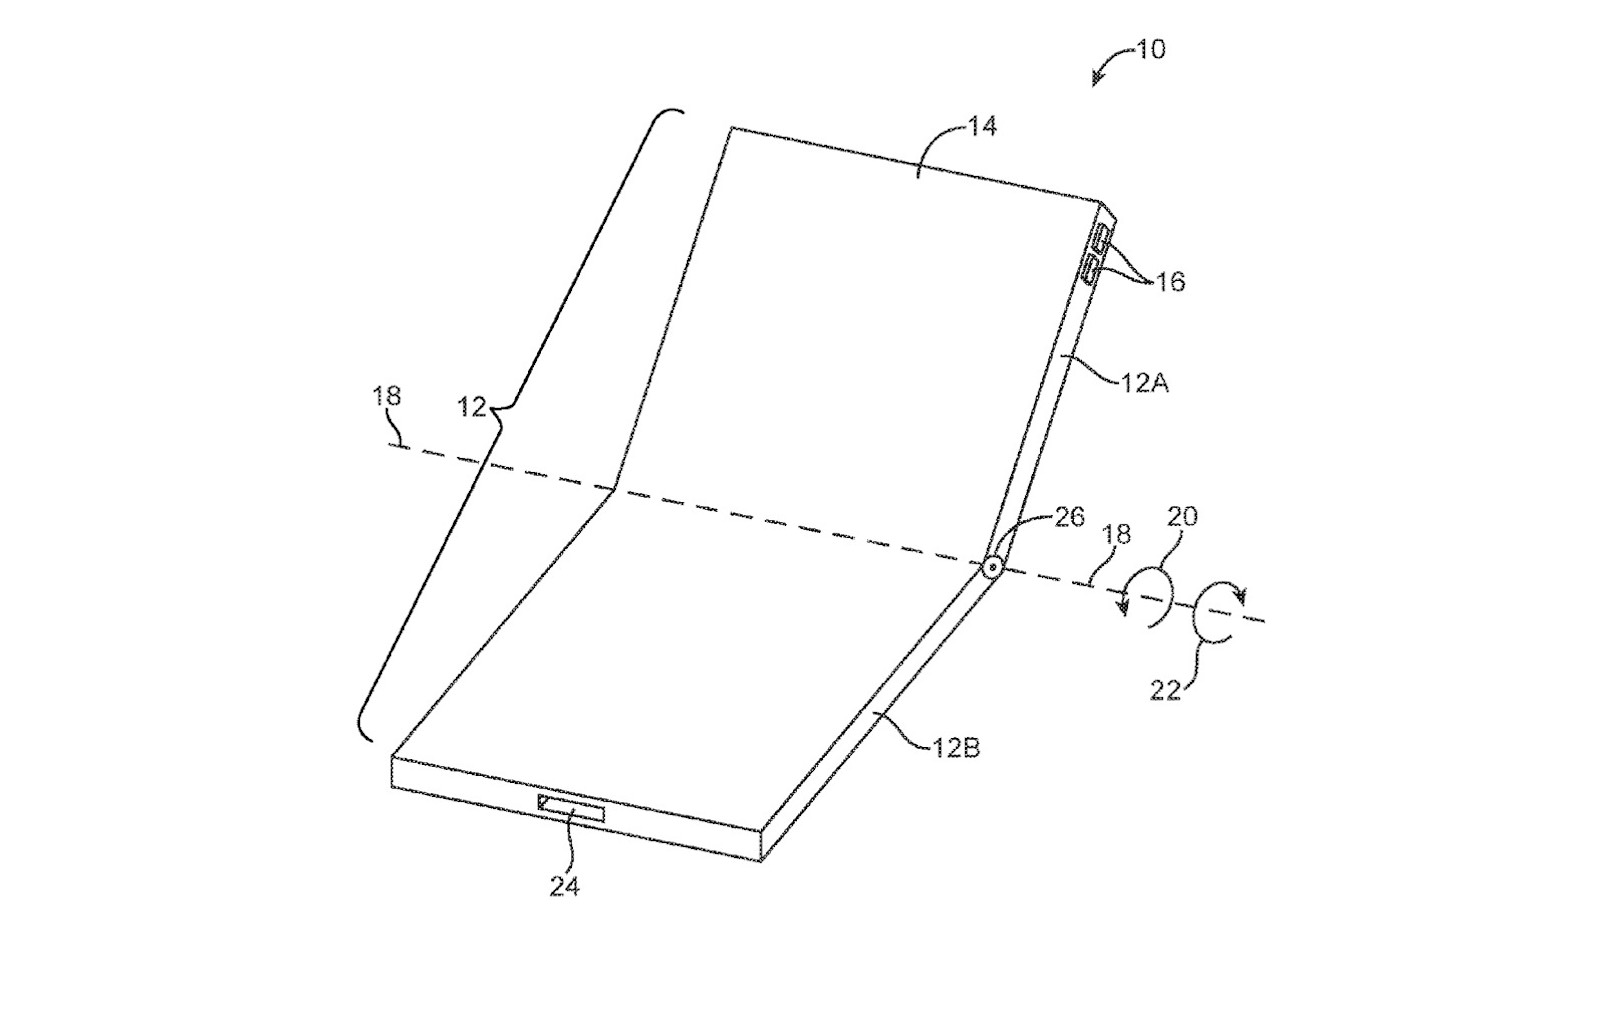 Foldable-iPhone-Patent.jpg